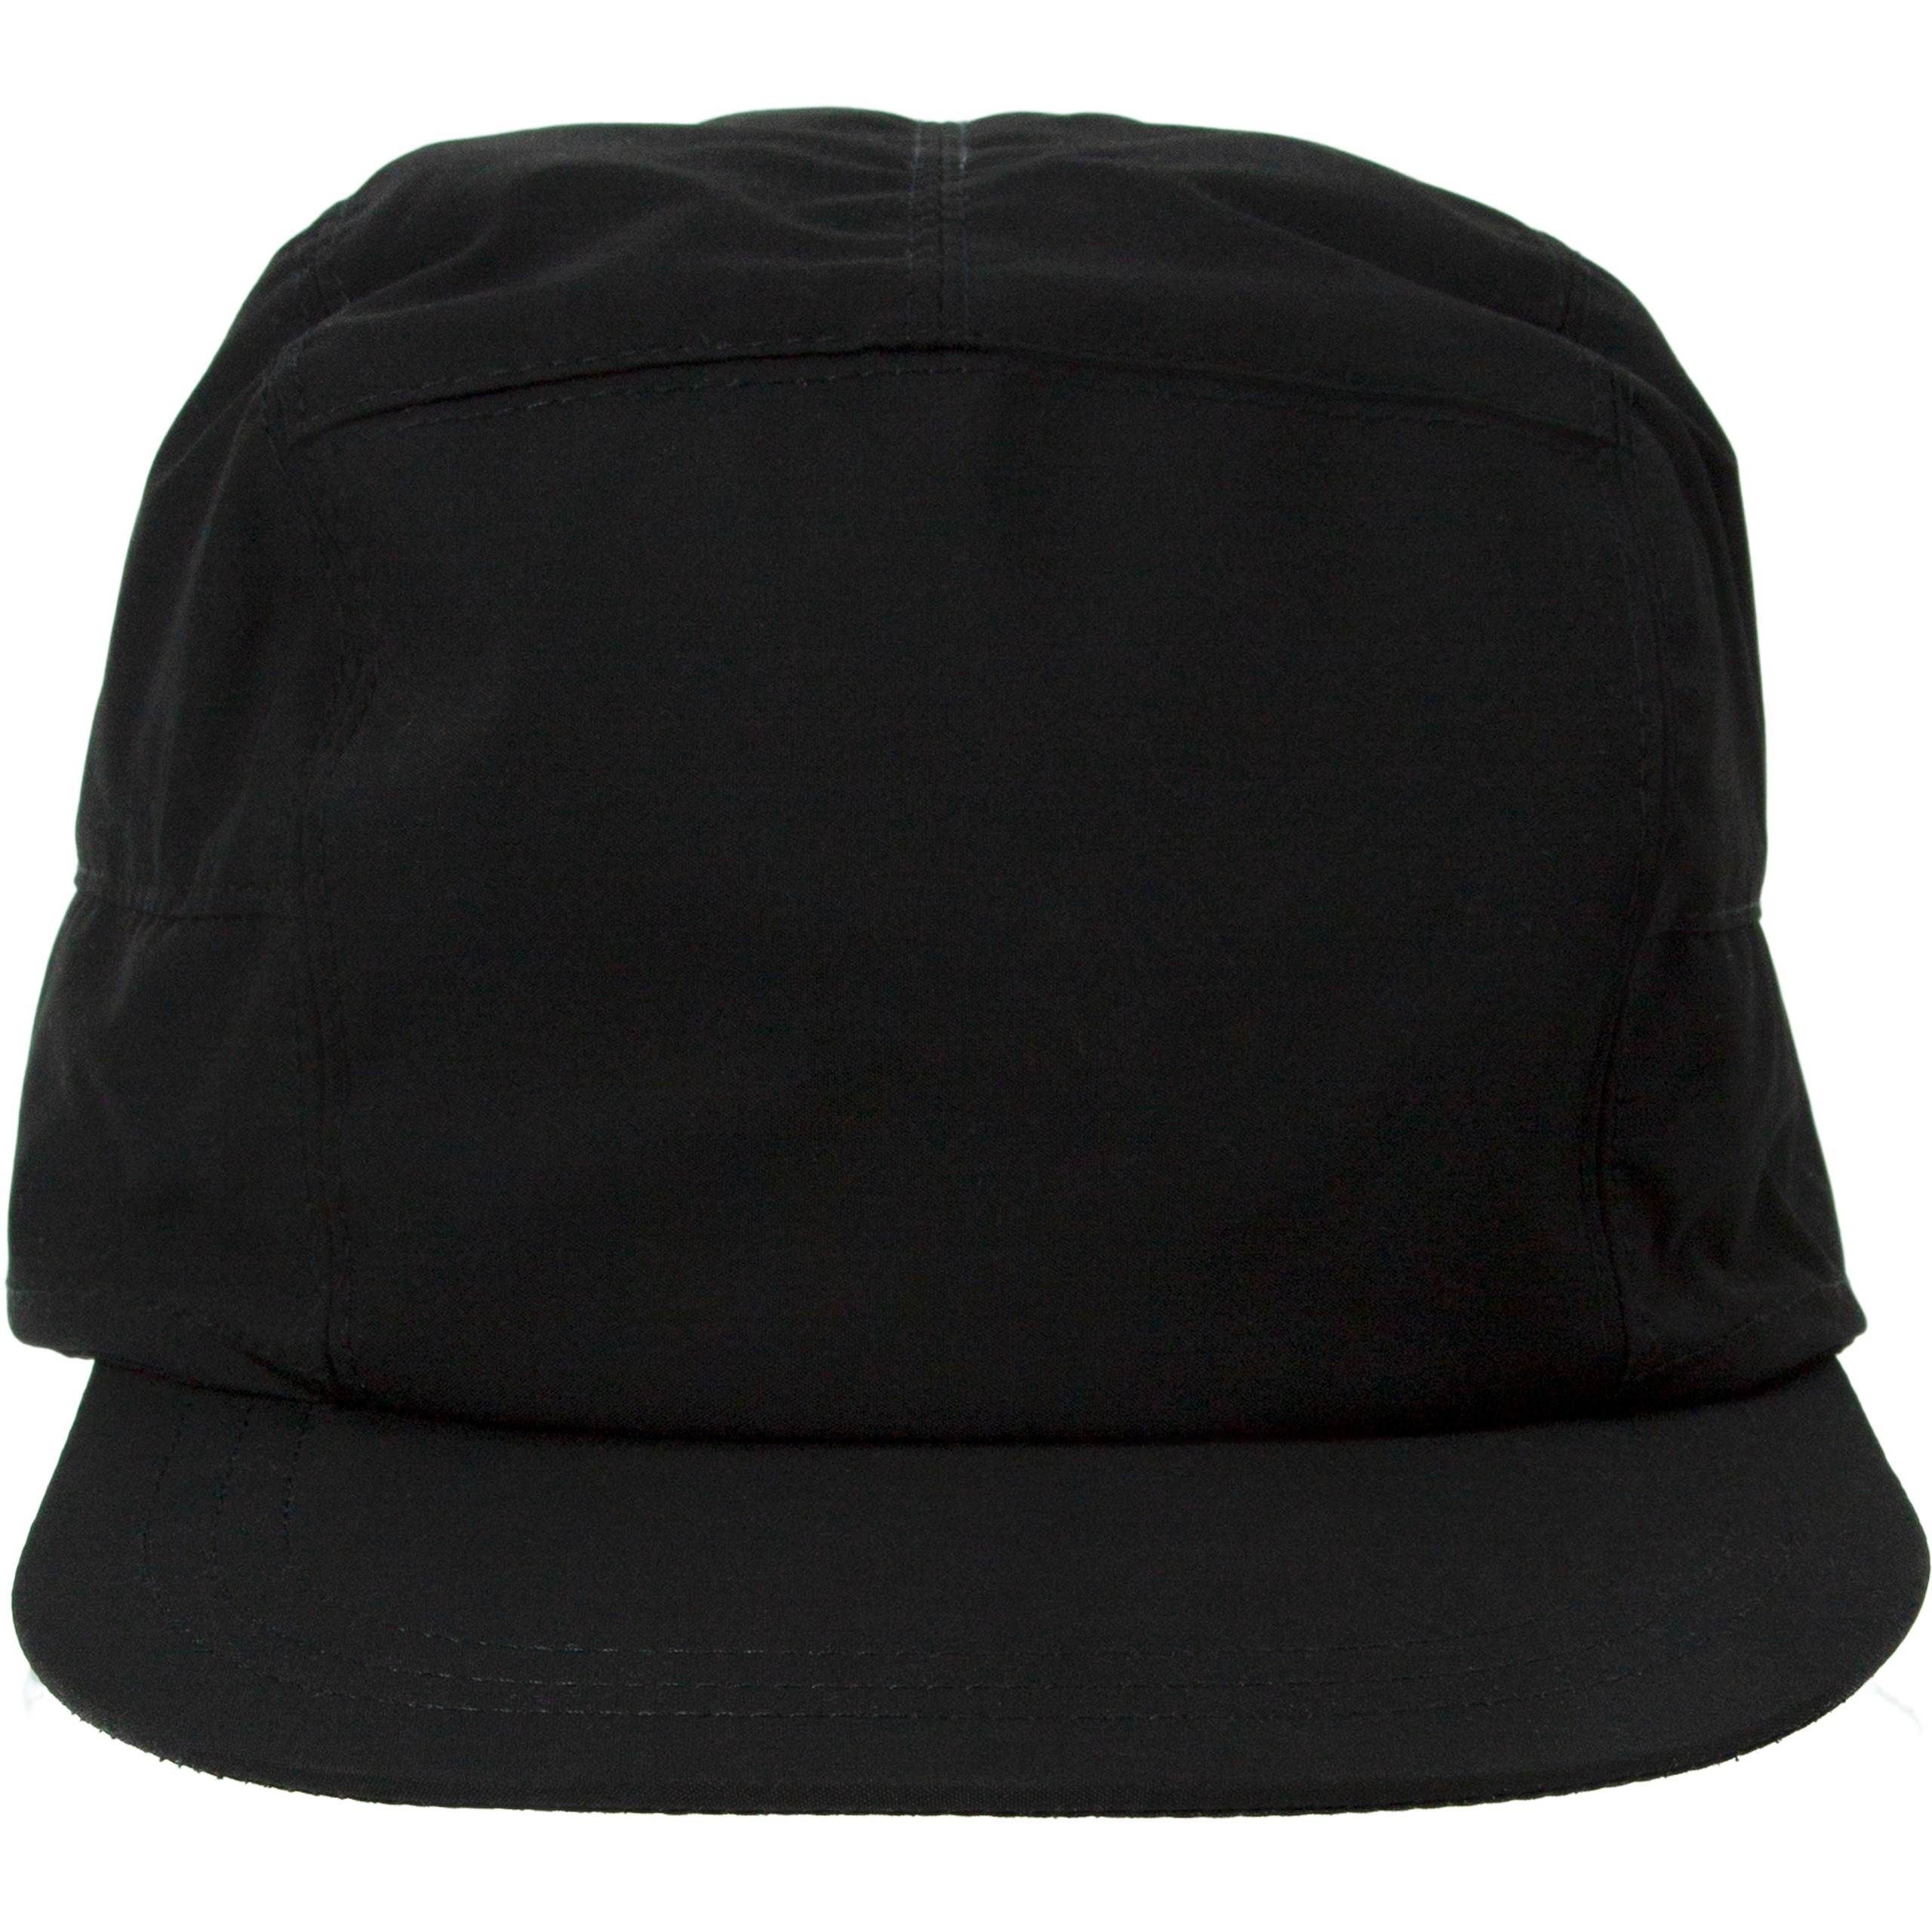 BLACK VEILED CAP - 1